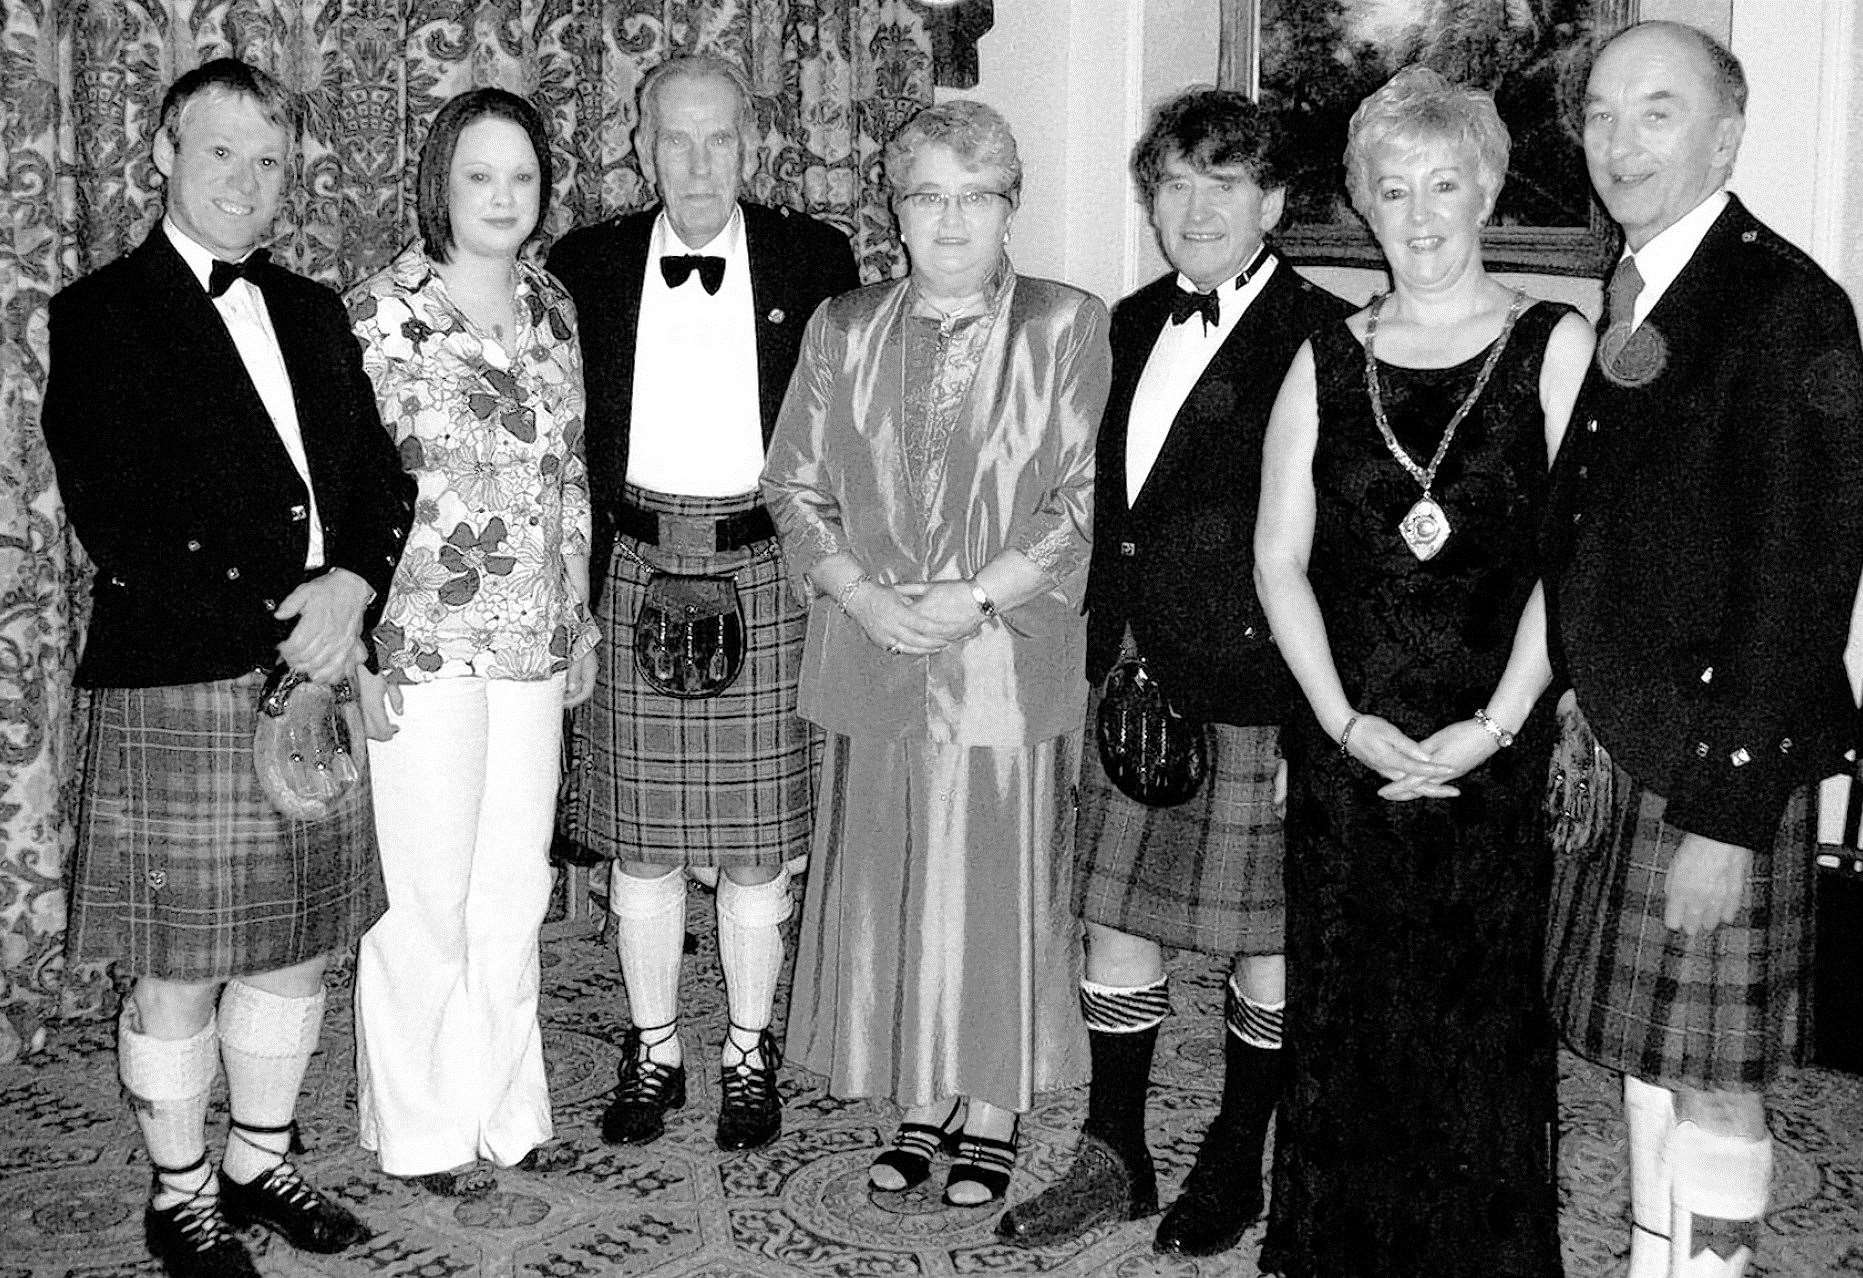 At the Edinburgh Caithness Association’s 170th anniversary function in 2007 are (from left) Alan Kitchen, accompanist; Mairi Macleod, harpist; John Lockie, former president; Anne Dunnett, Lord-Lieutenant of Caithness; Alasdair Gillies, Mod gold medallist; Linda Stuart, president; and John Macleod, secretary.